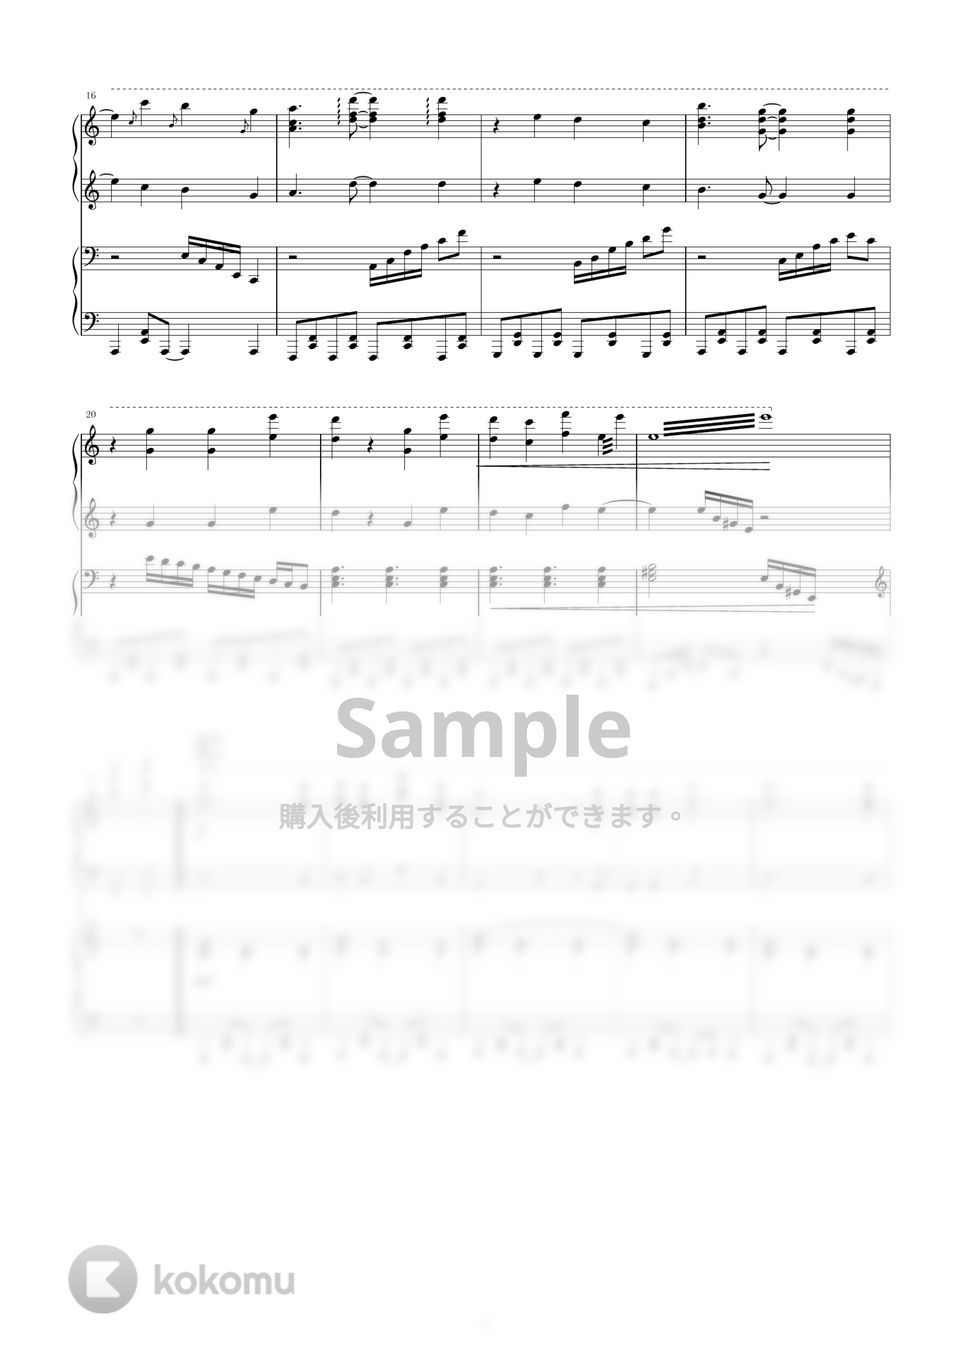 Vaundy - 裸の勇者 (ピアノ連弾) by norimaki